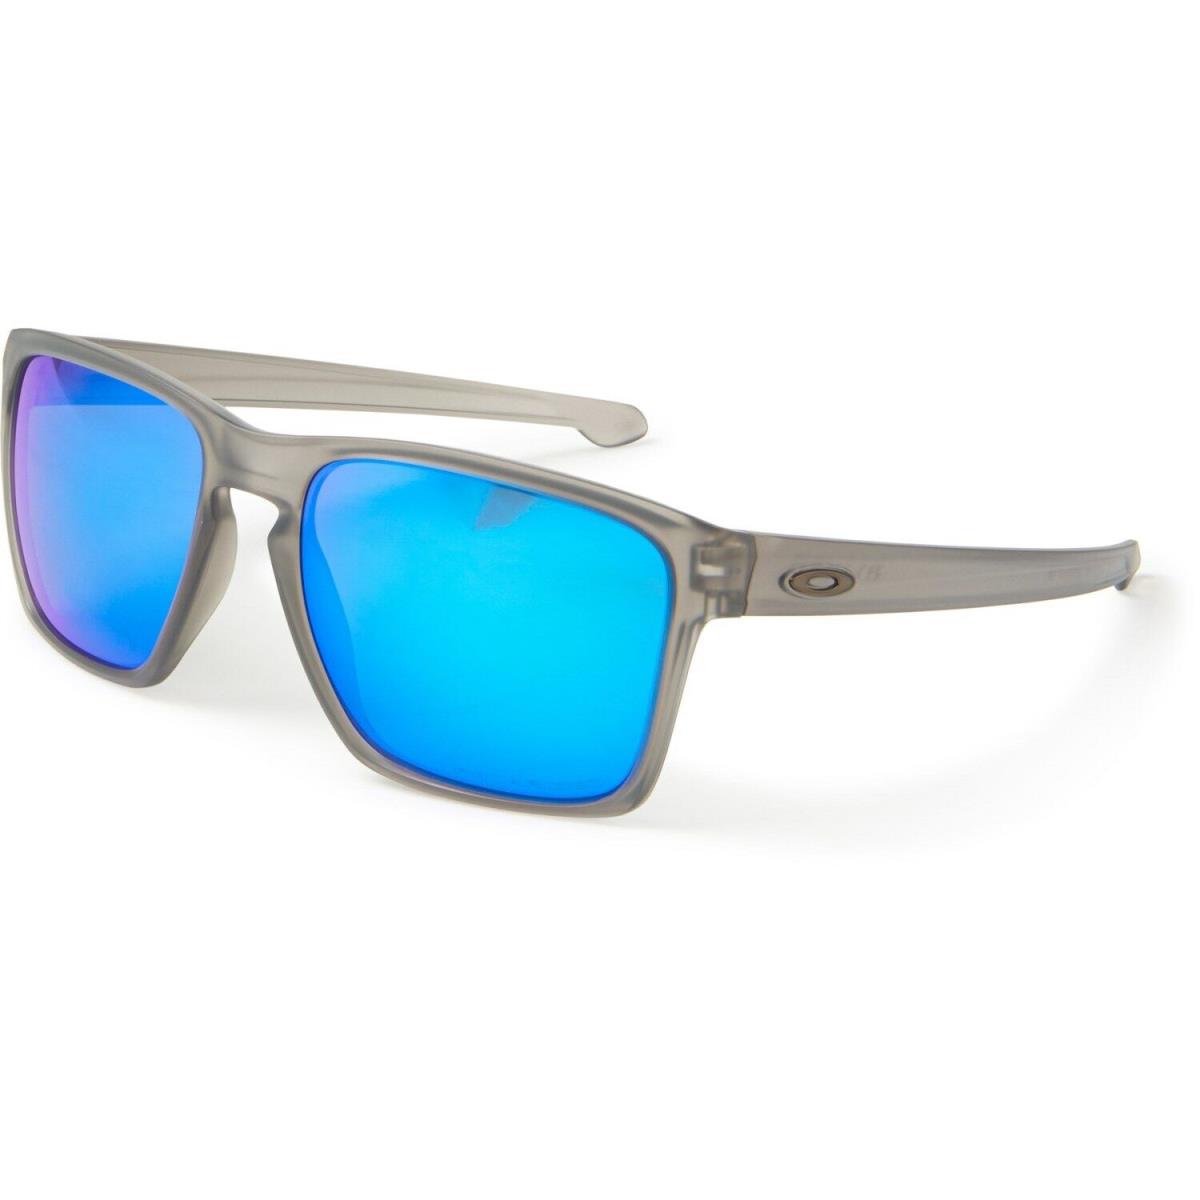 Oakley Sliver XL Polarized Sunglasses - OO9341 03/MatteGreyInk/SapphireIridium